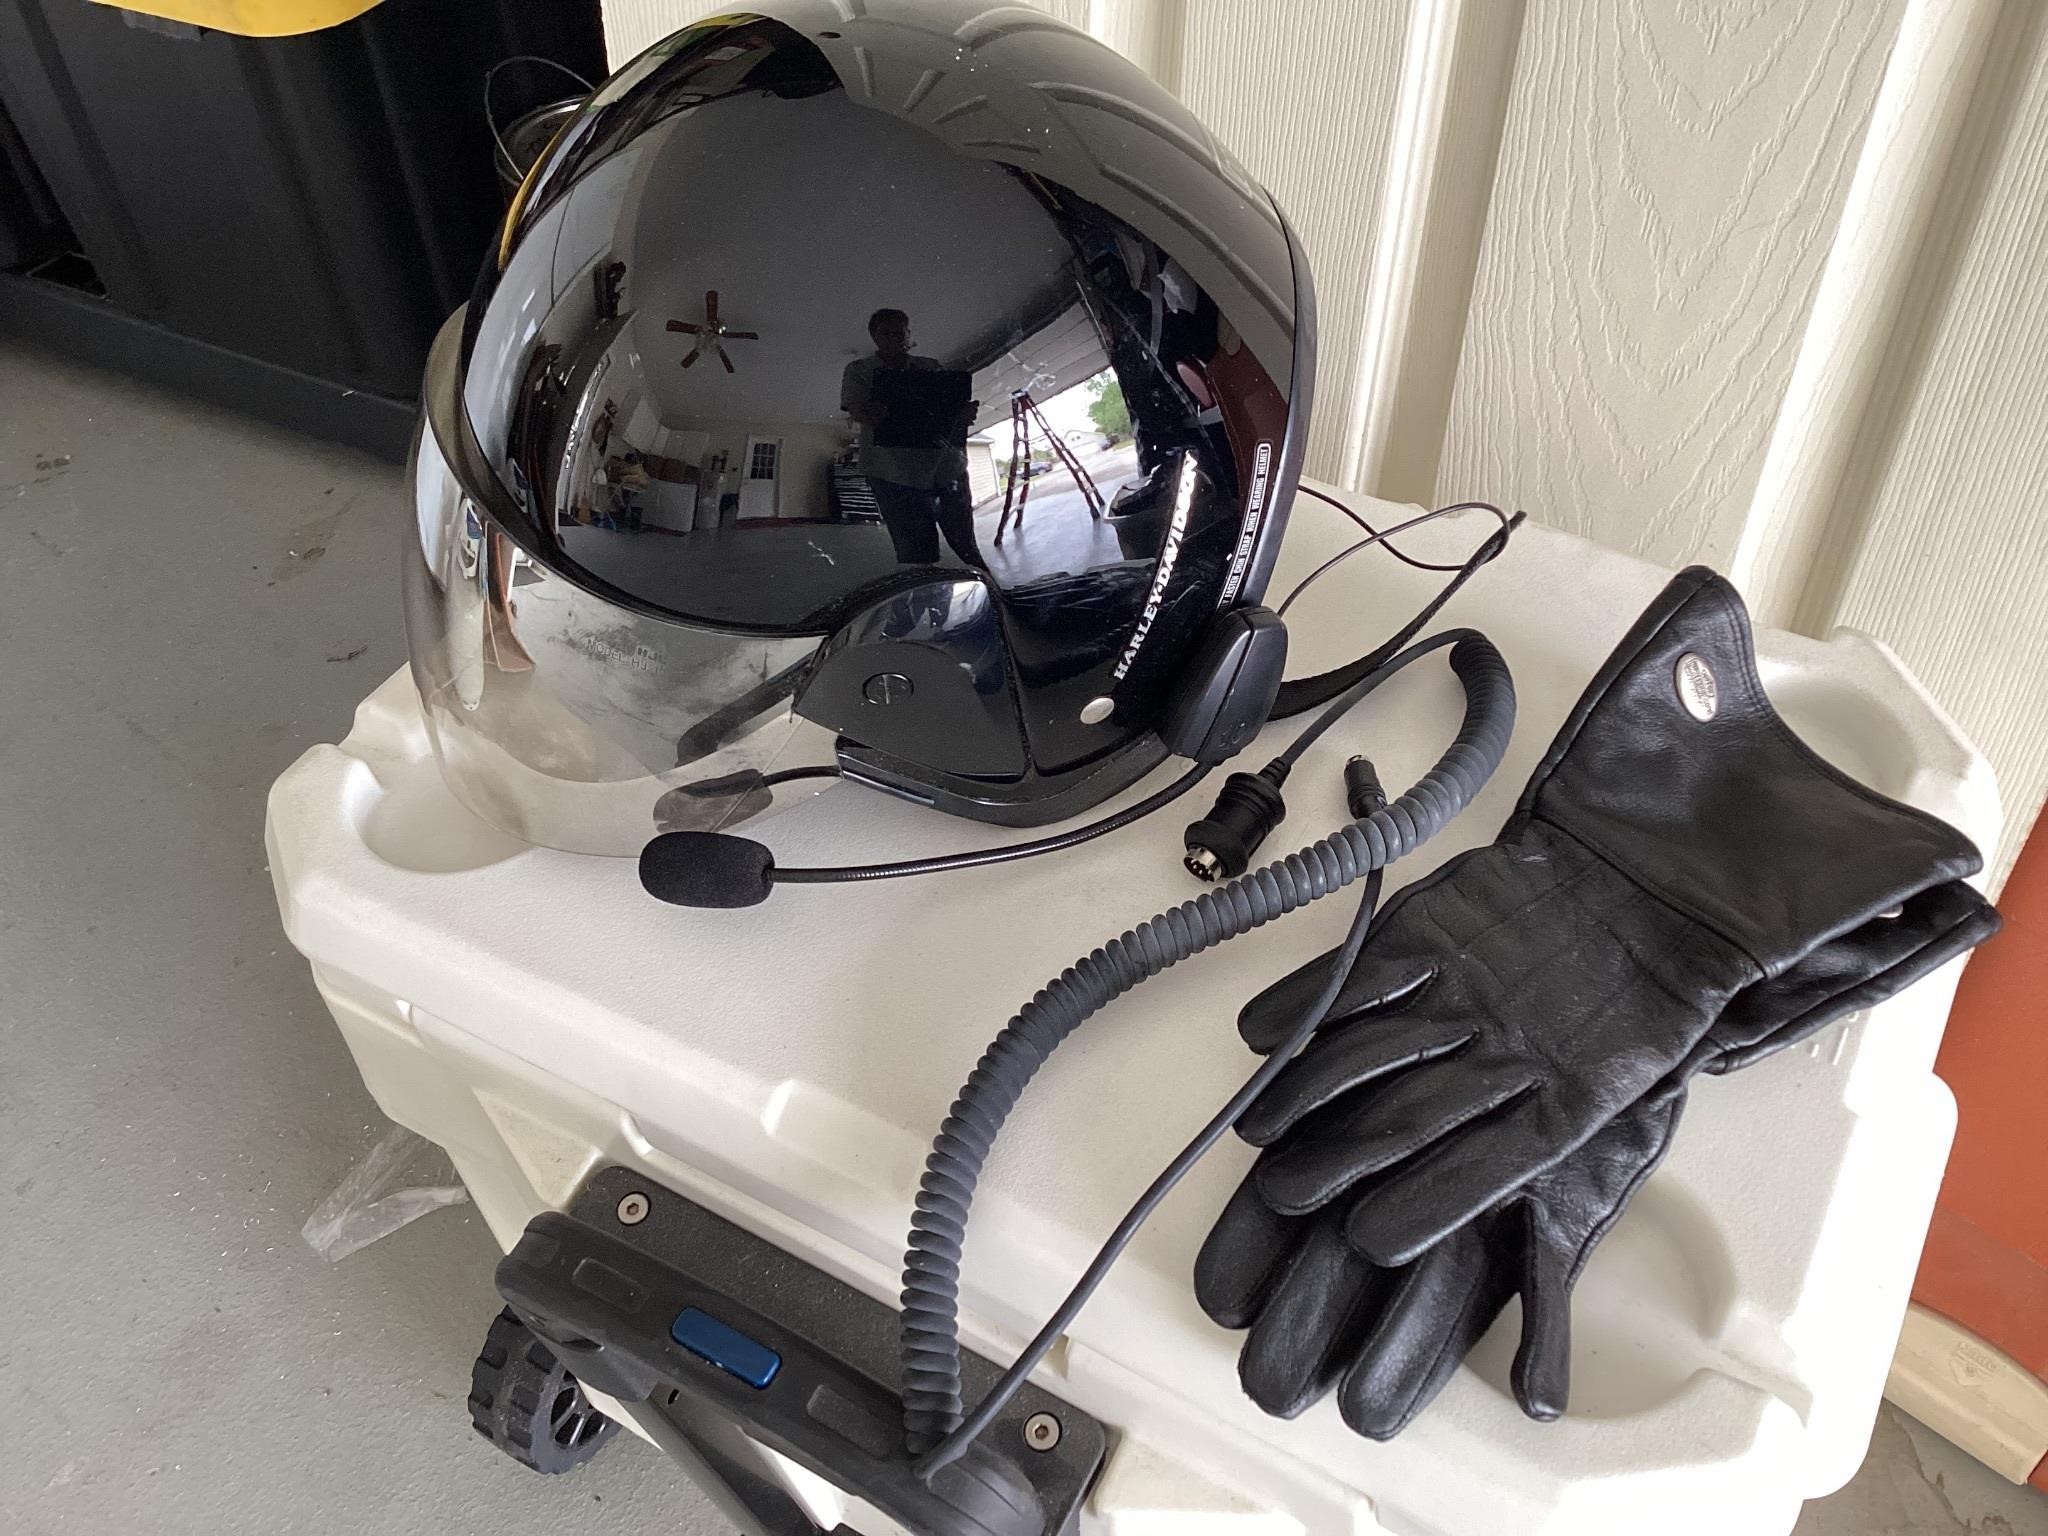 Harley Davidson Jet helmet w/gauntlet gloves